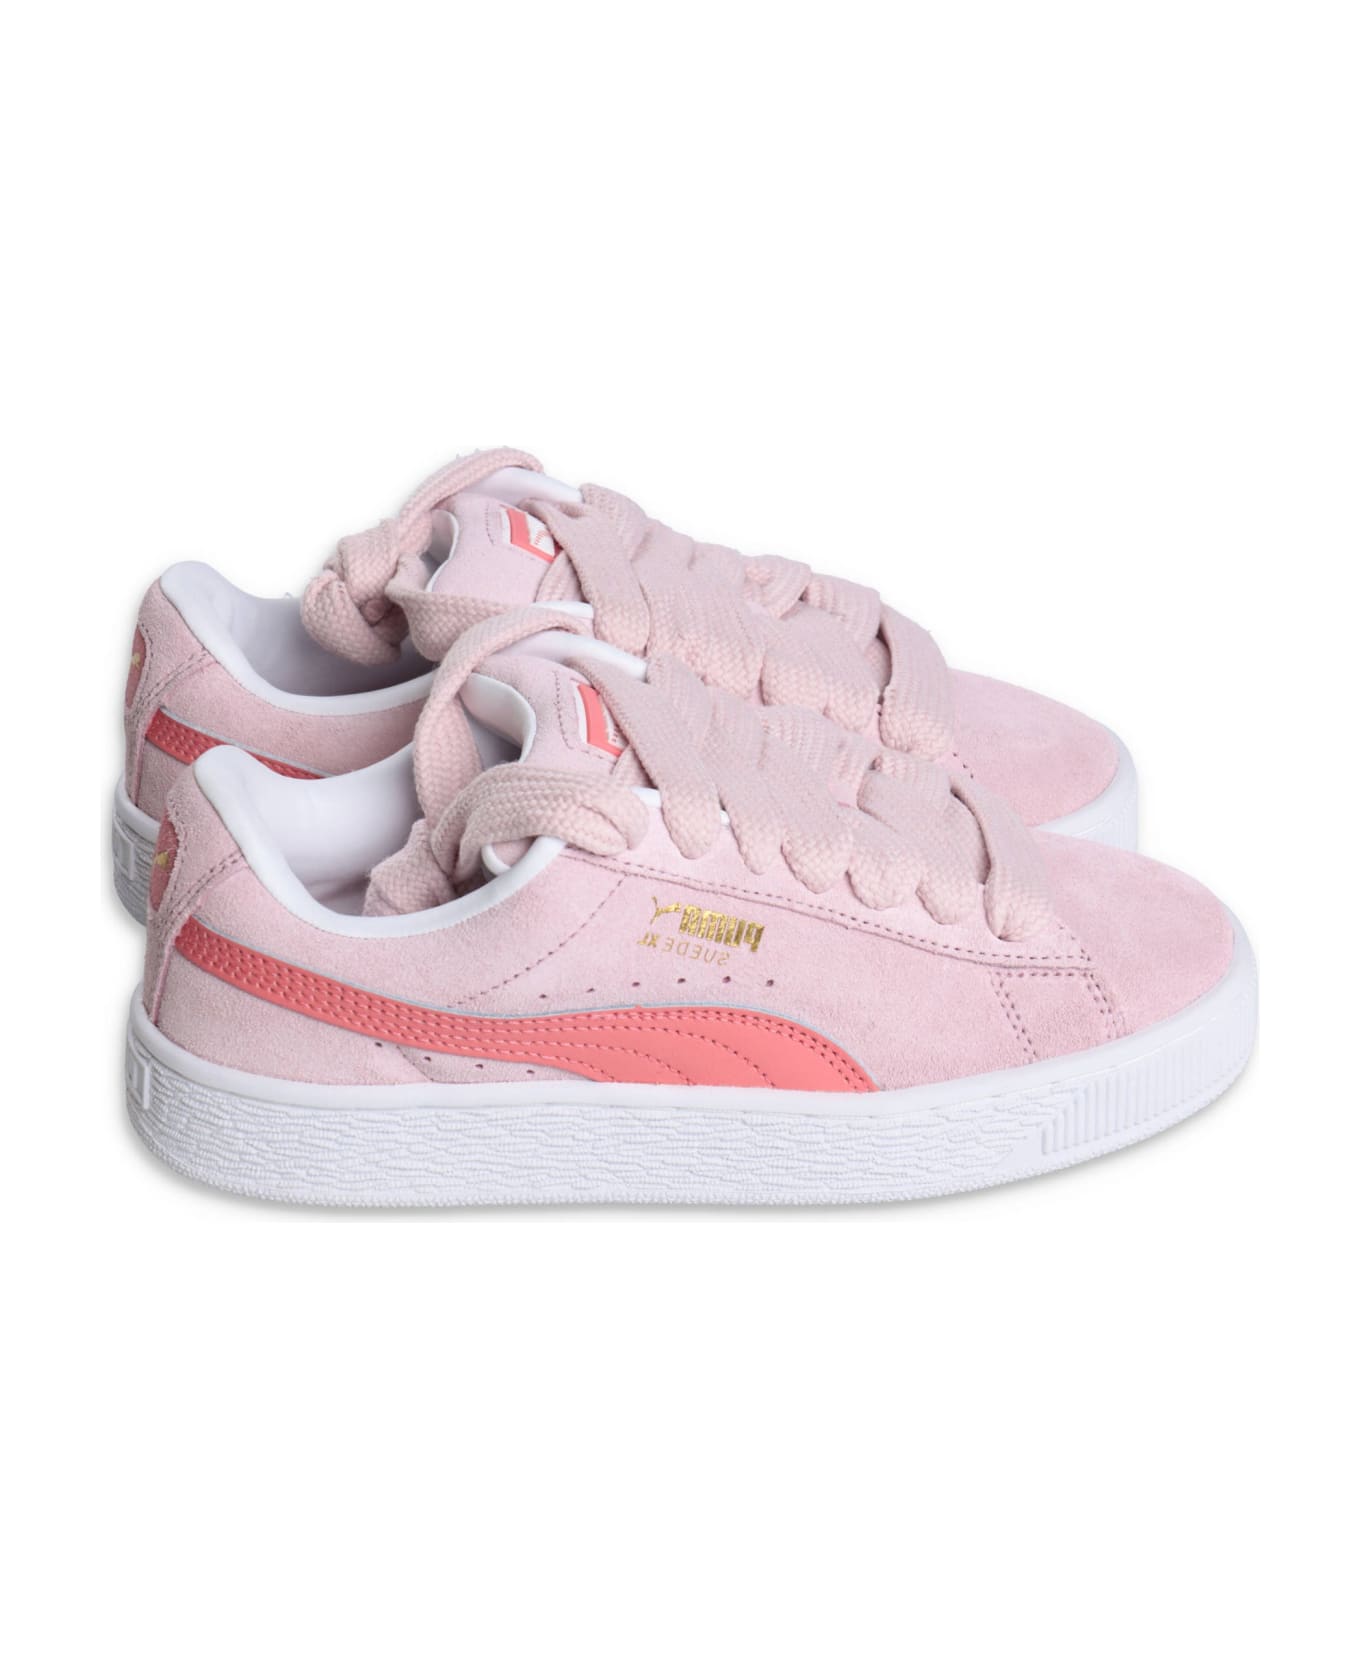 Puma Sneakers Rosa In Pelle Scamosciata Bambina - Rosa